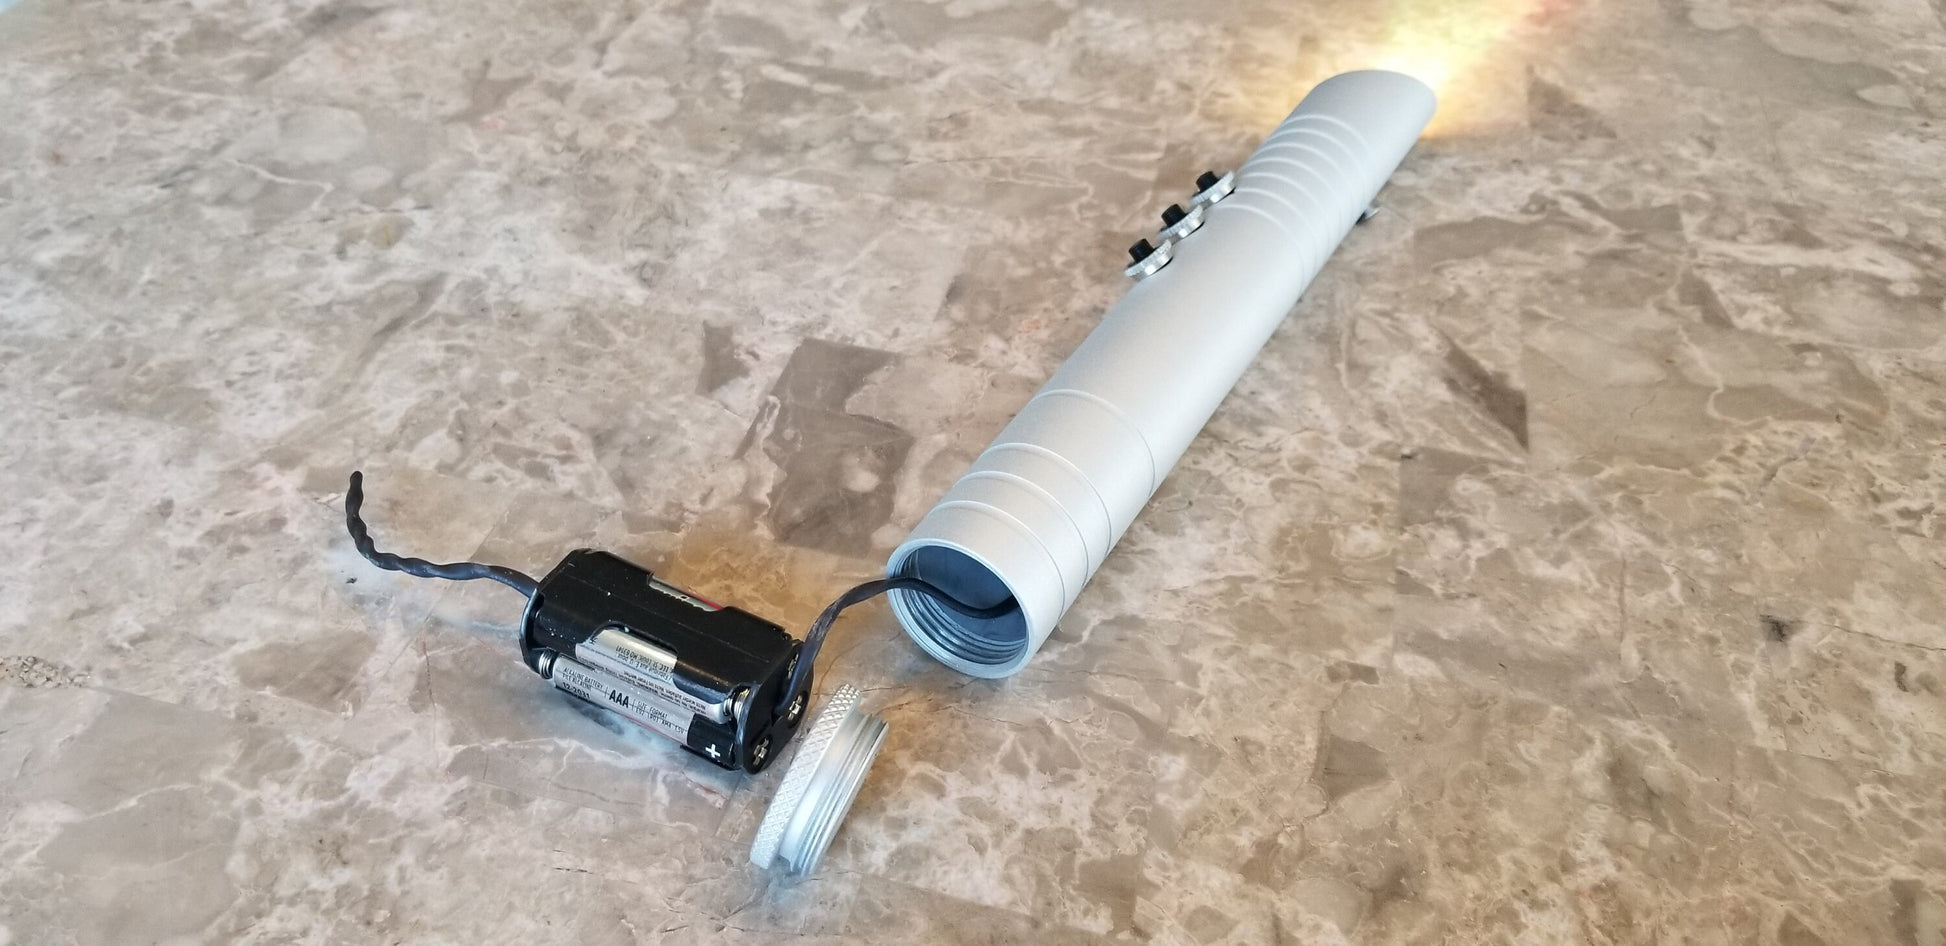 Light Saber Color Change Lightsaber RGB "The Raver" Durable Light Saber Buy 2 and receive free coupling adapter Star Wars Gift Bossaber